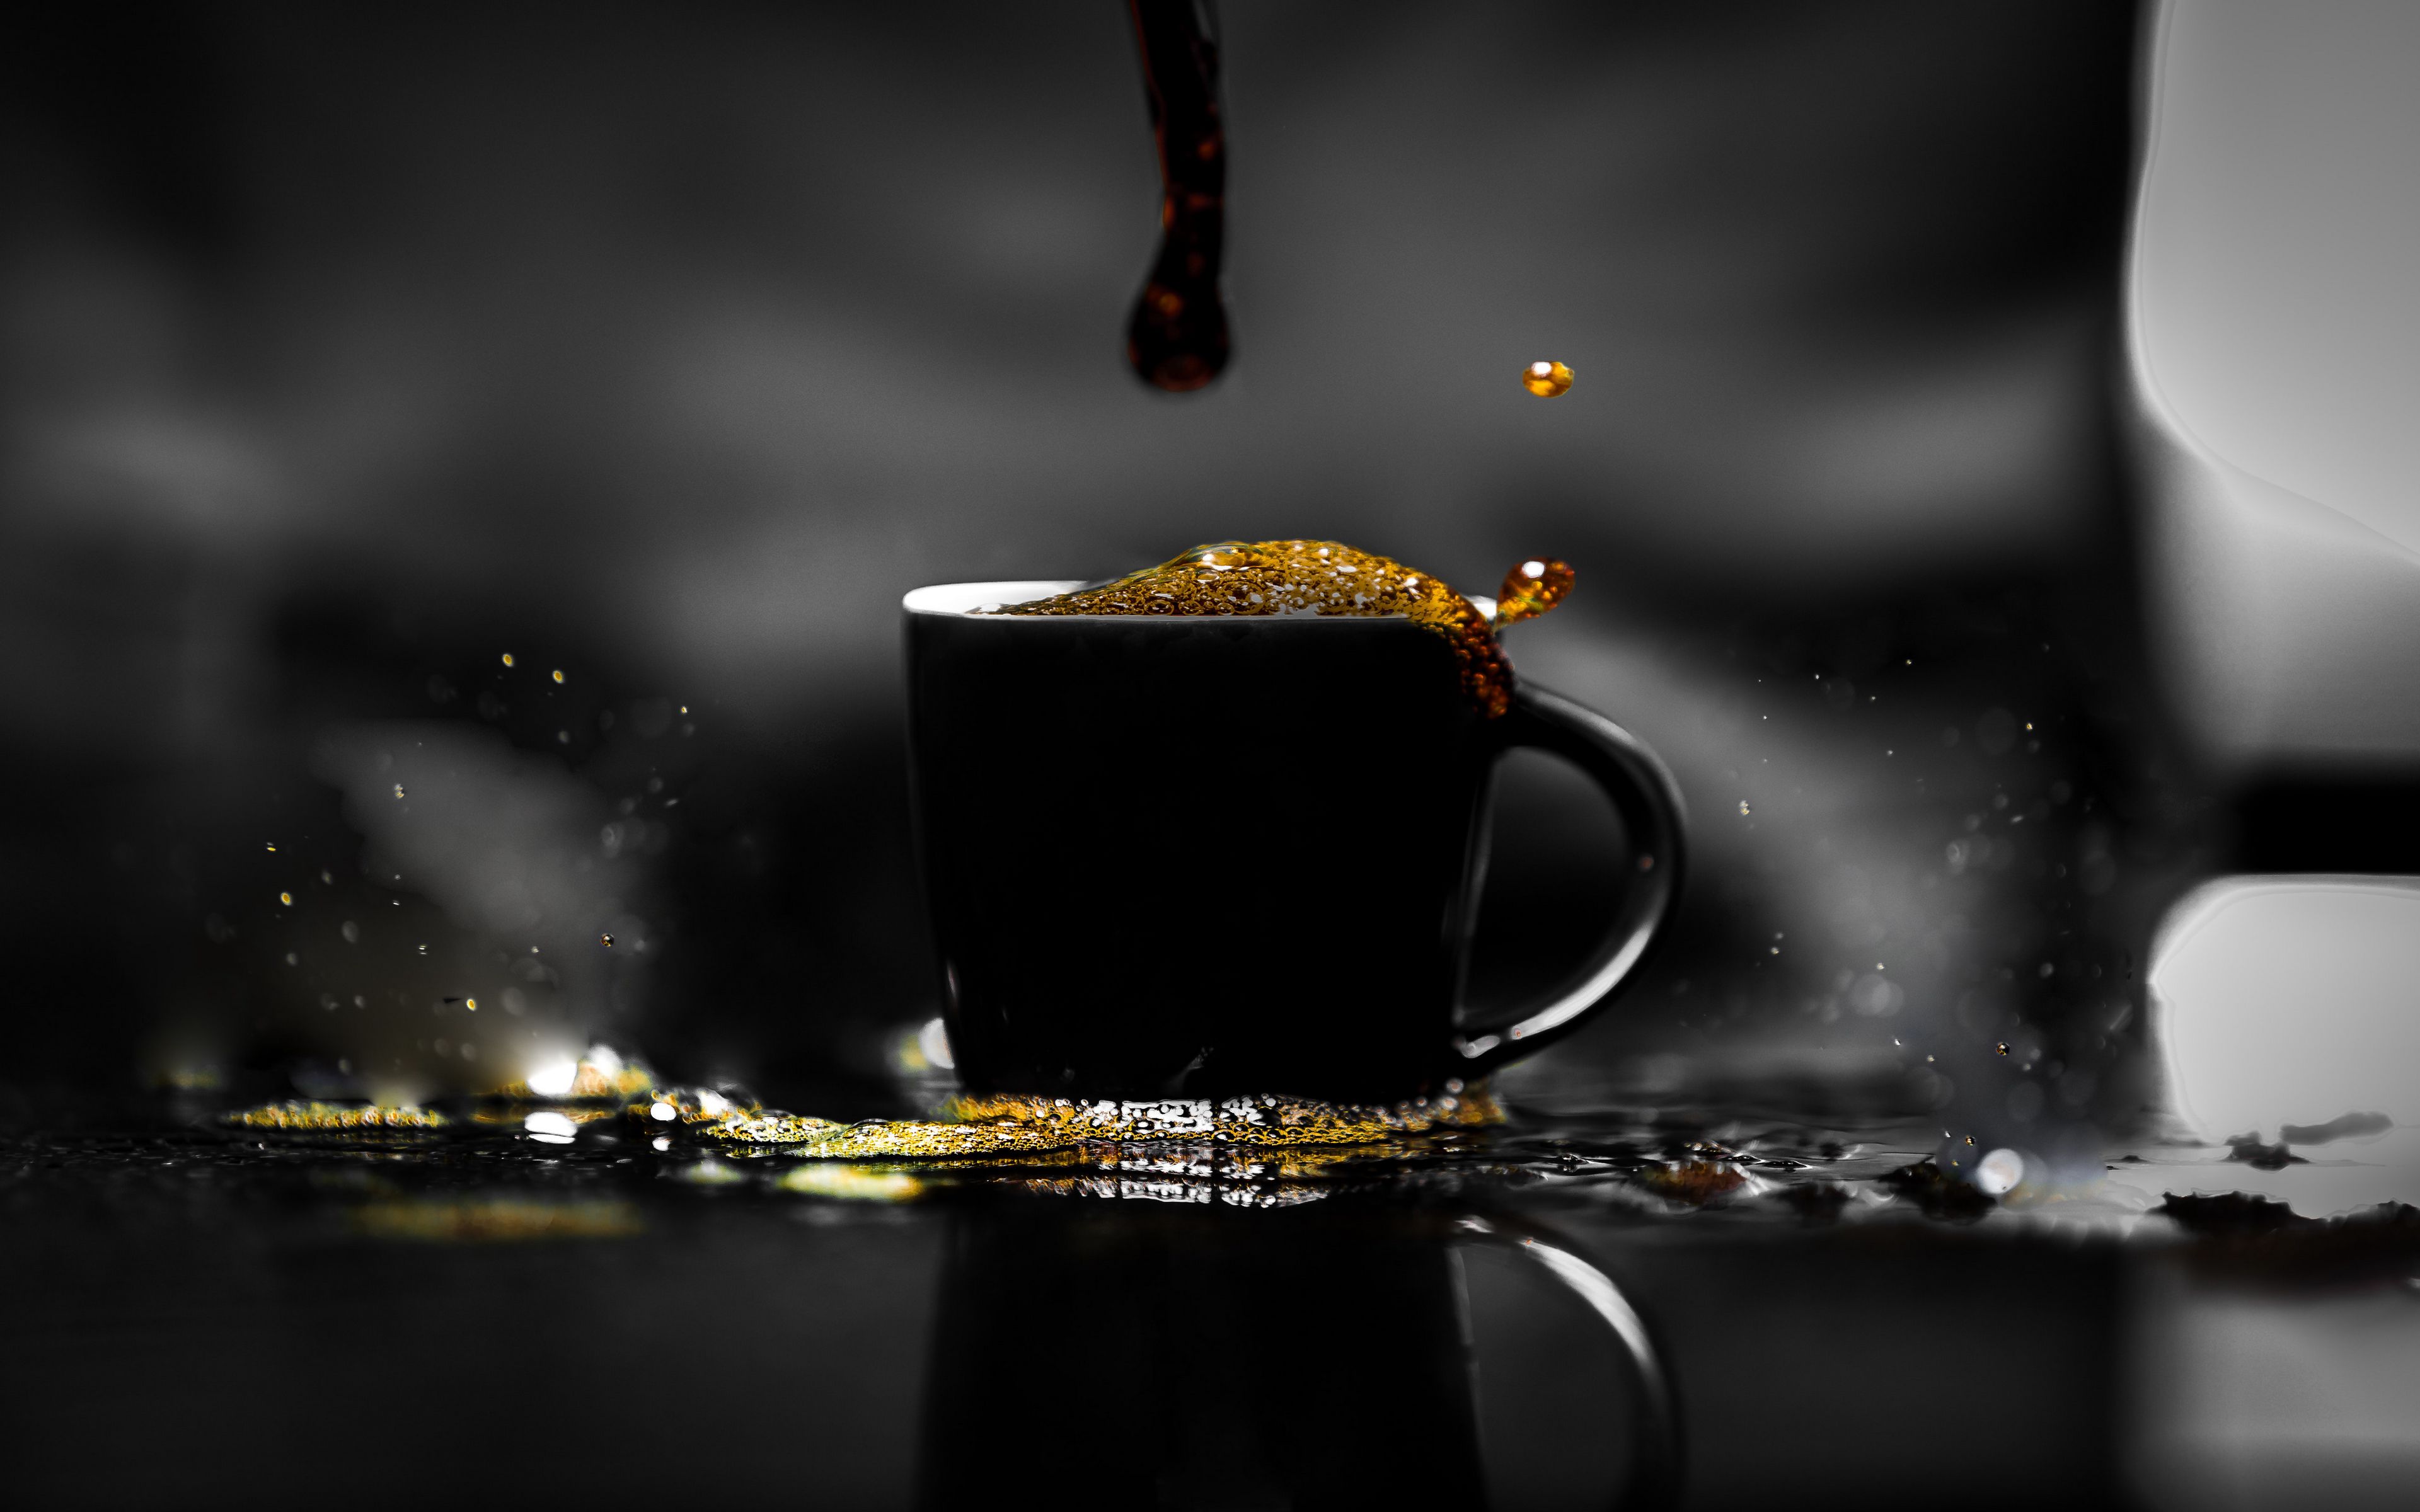 Cup of black coffee Wallpaper 4k Ultra HD ID:5730